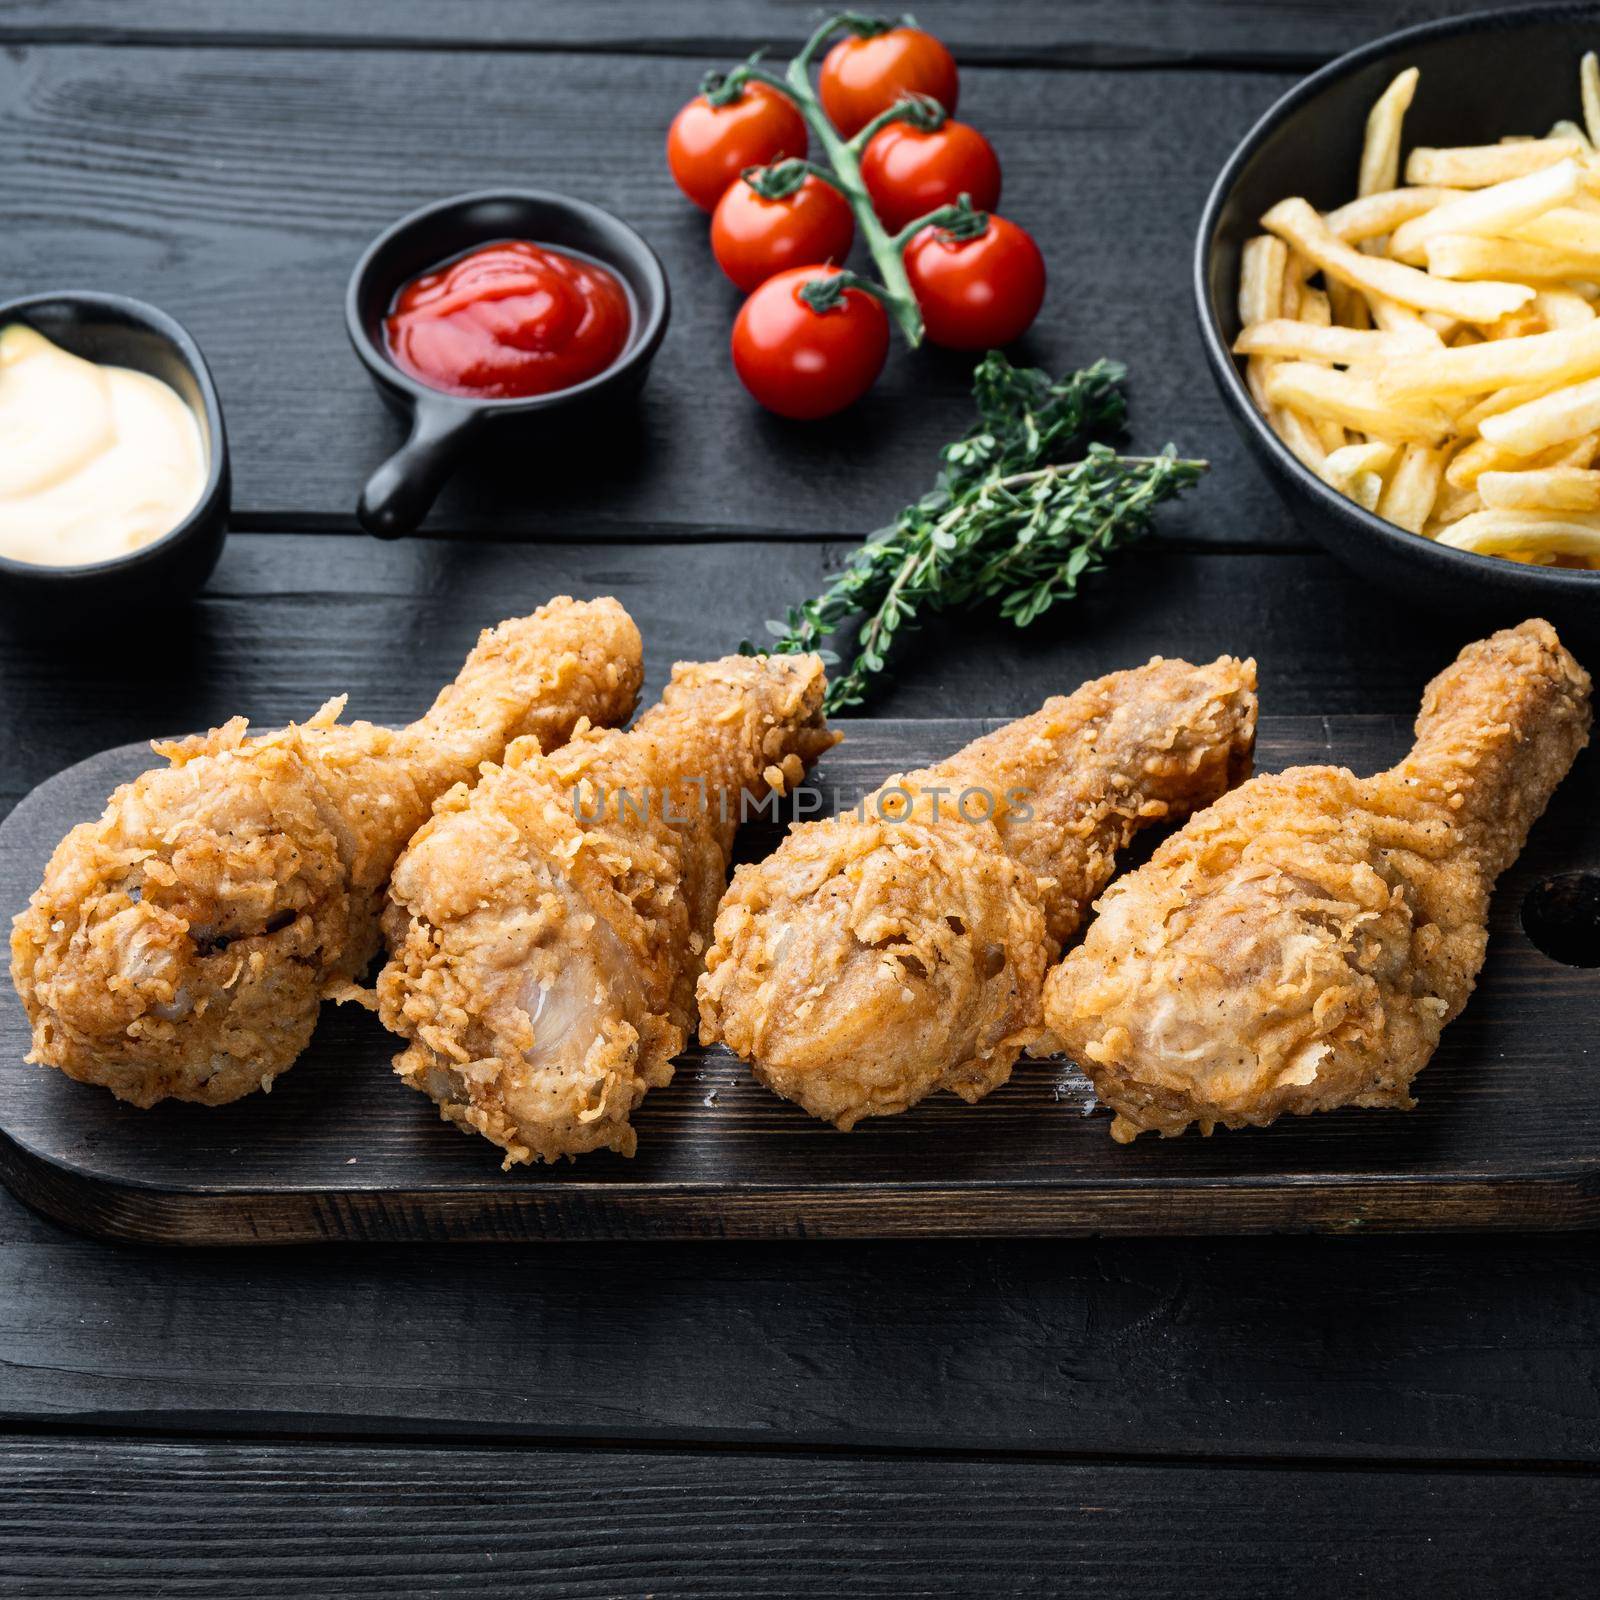 Fried crispy chicken legs, drumstick on black wooden table by Ilianesolenyi